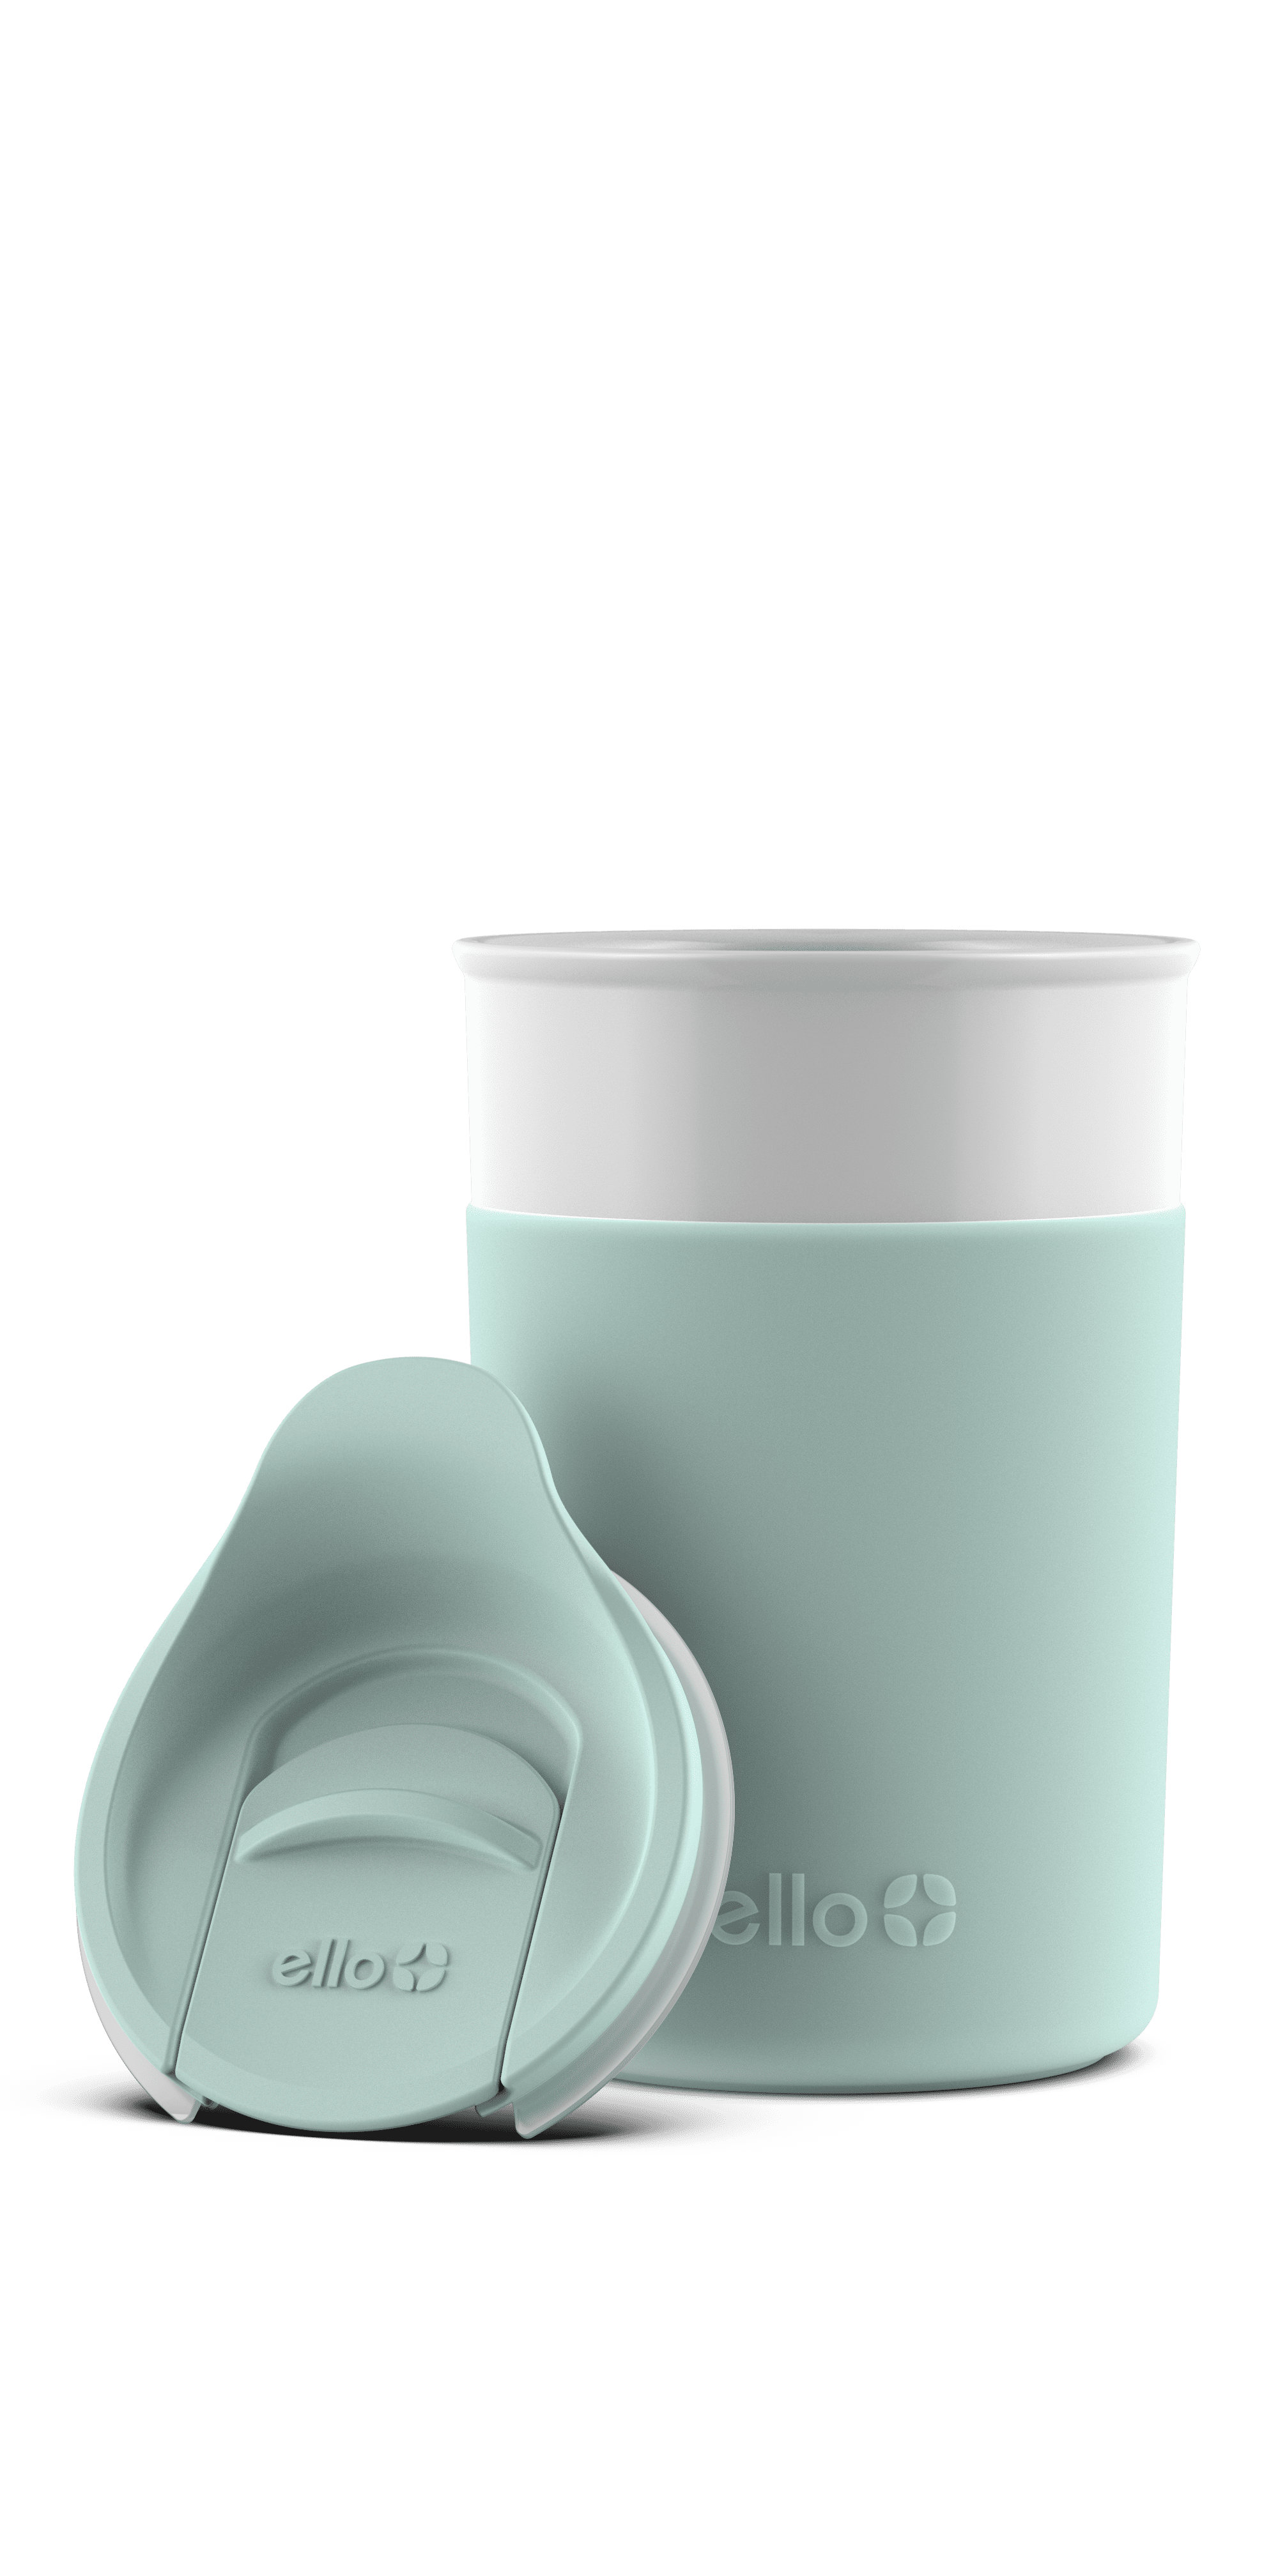 Ello Coffee Tea Drink Travel Mug Cup Gray Stripes Ceramic Tumbler